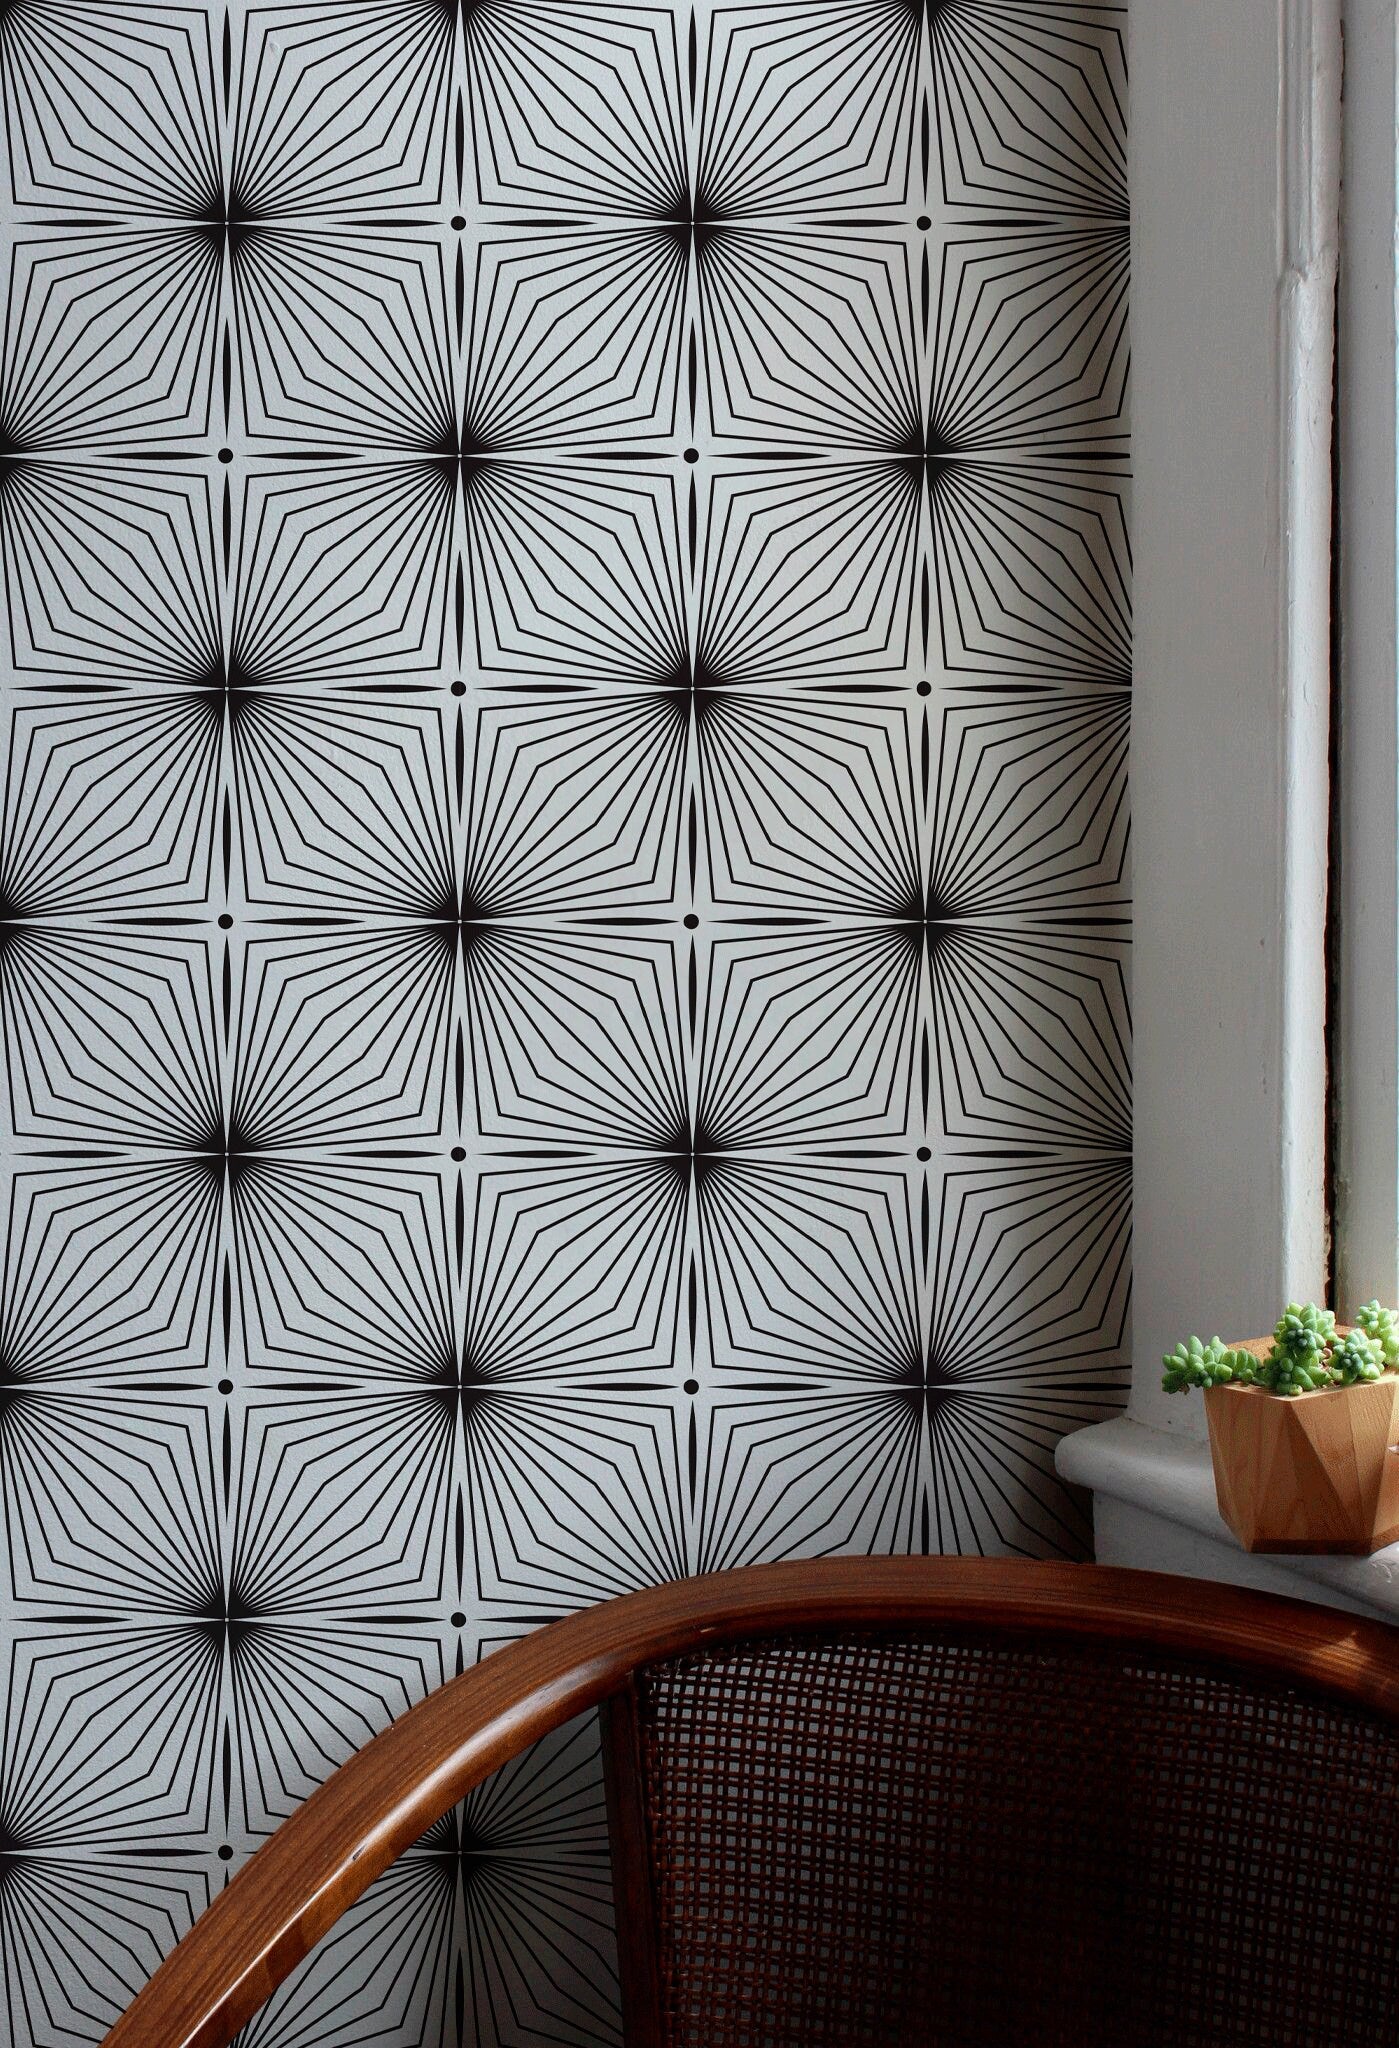 Abstract Geometric Removable Wallpaper Wall Decor Home Decor Wall Art Printable Wall Art Room Decor Wall Prints - B821